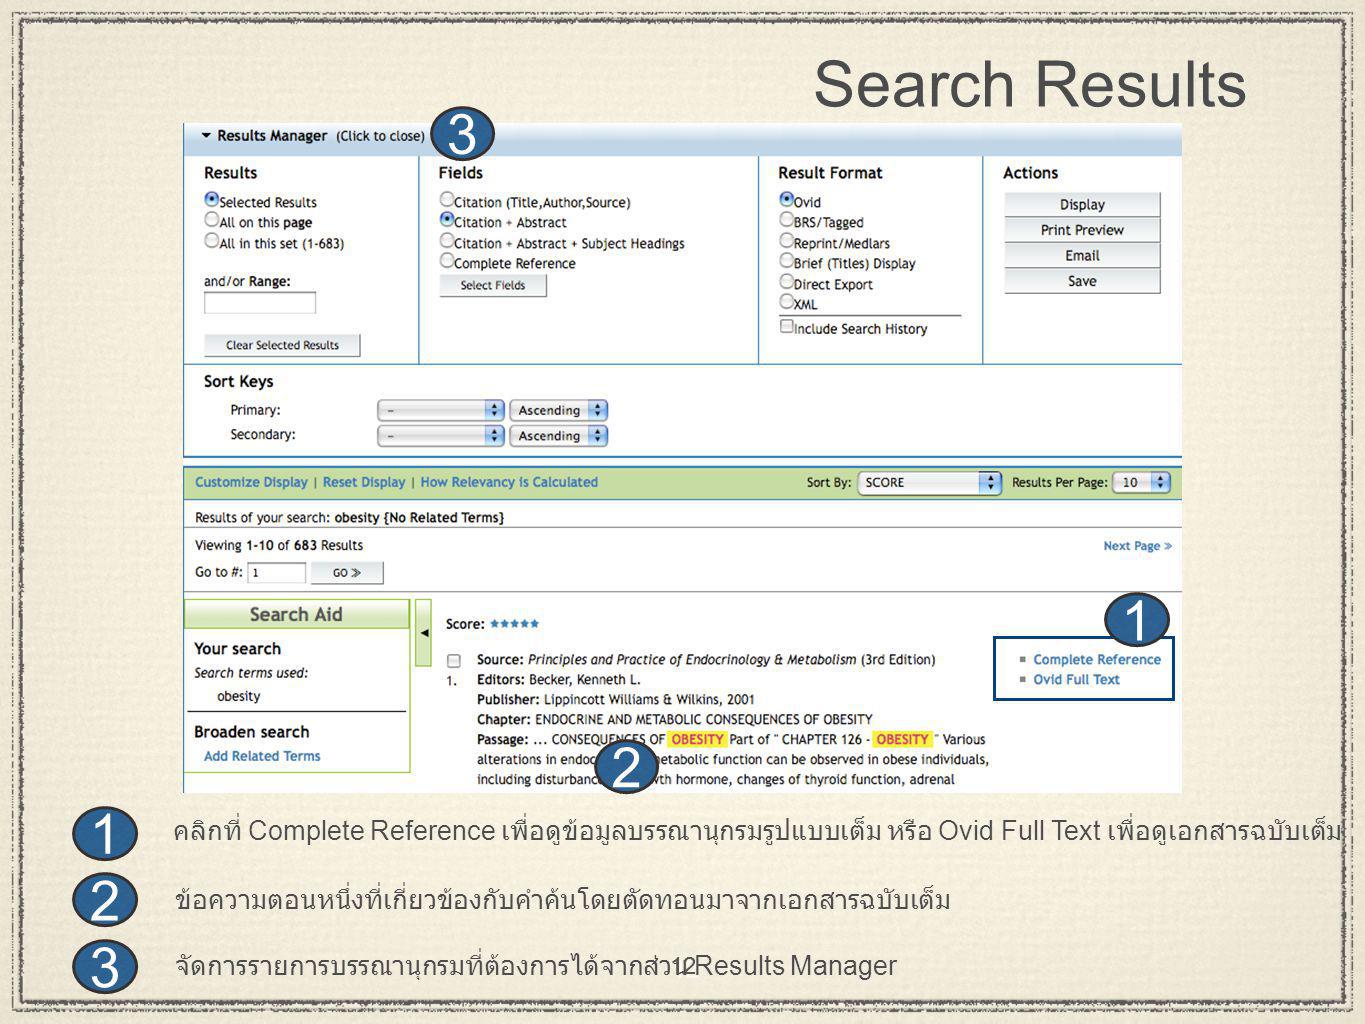 12 Search Results จัดการรายการบรรณานุกรมที่ต้องการได้จากส่วน Results Manager ข้อความตอนหนึ่งที่เกี่ยวข้องกับคำค้นโดยตัดทอนมาจากเอกสารฉบับเต็ม คลิกที่ Complete Reference เพื่อดูข้อมูลบรรณานุกรมรูปแบบเต็ม หรือ Ovid Full Text เพื่อดูเอกสารฉบับเต็ม 1 12